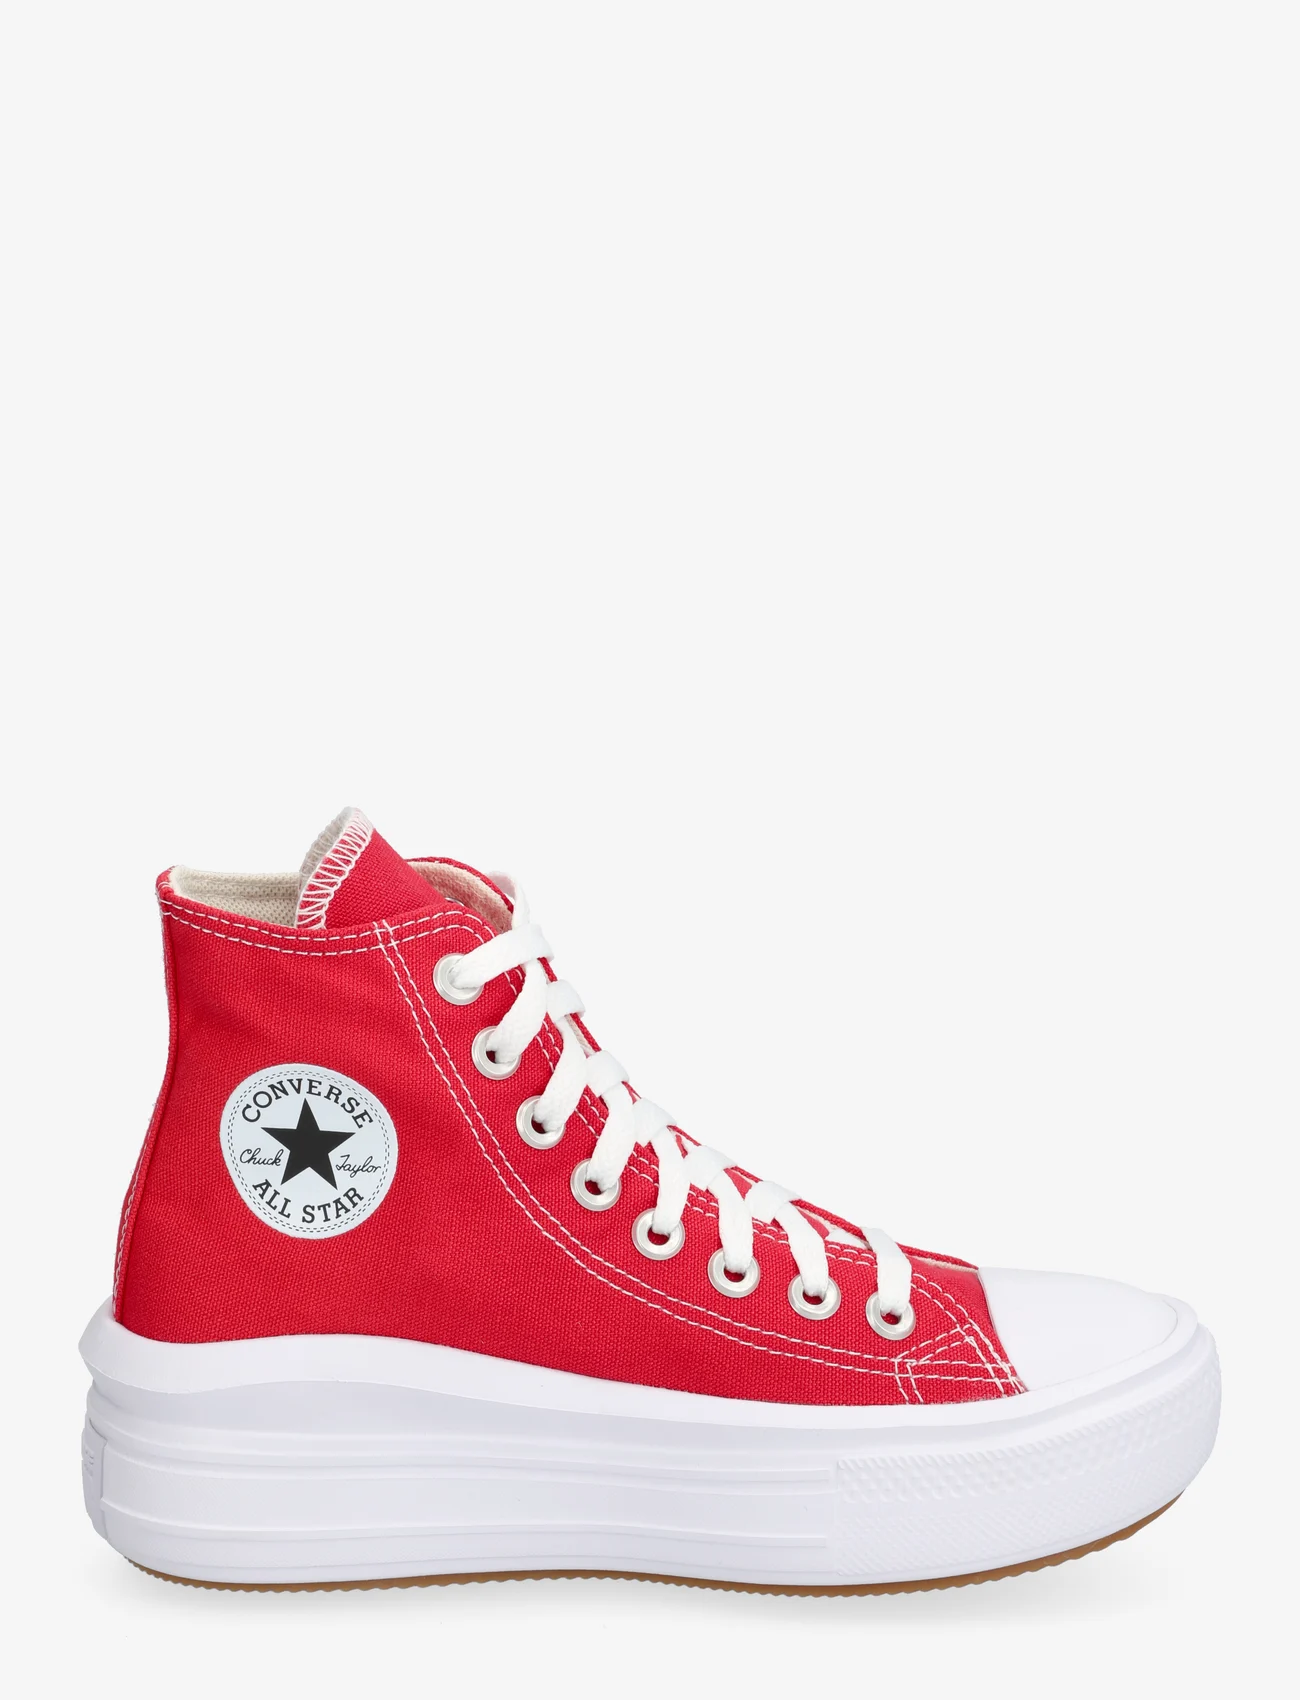 Converse - Chuck Taylor All Star Move - hohe sneaker - red/white/gum - 1